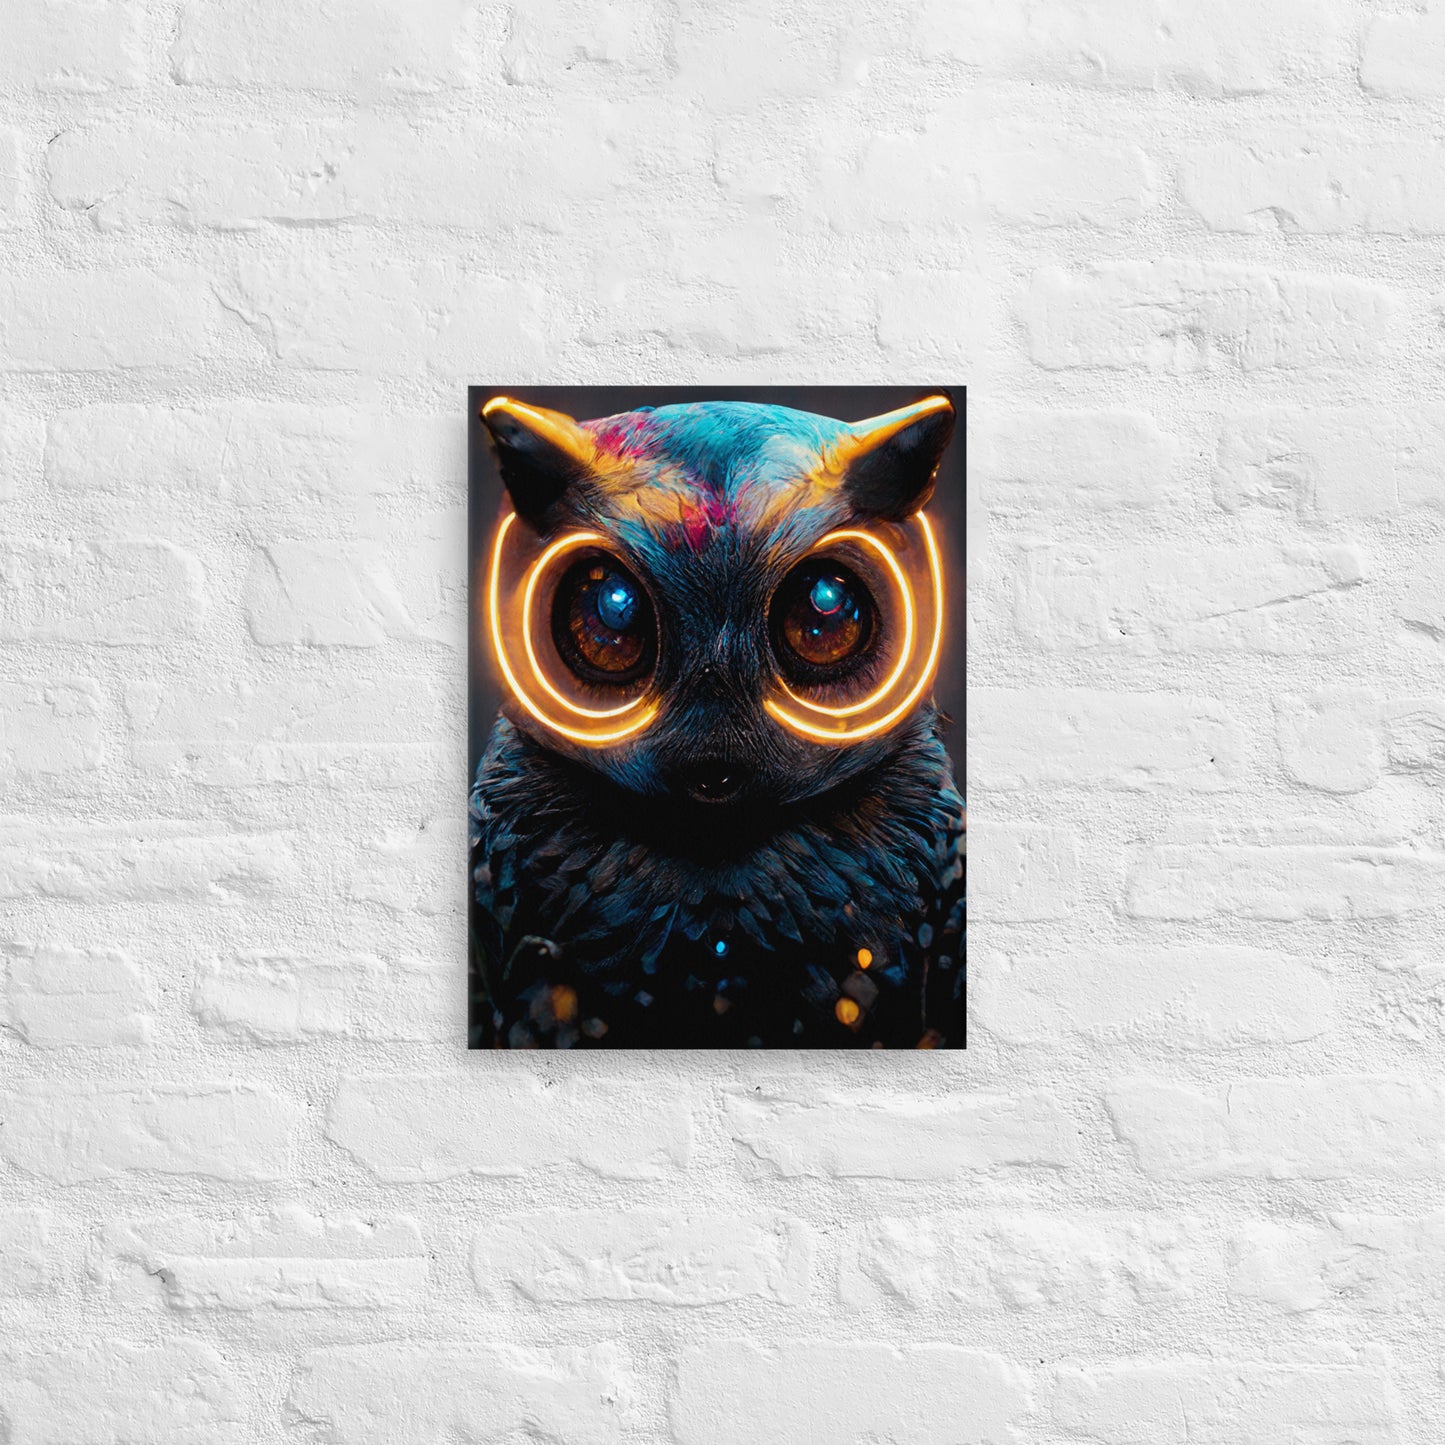 Electro owl 1.0 Thin Canvas Wall Art